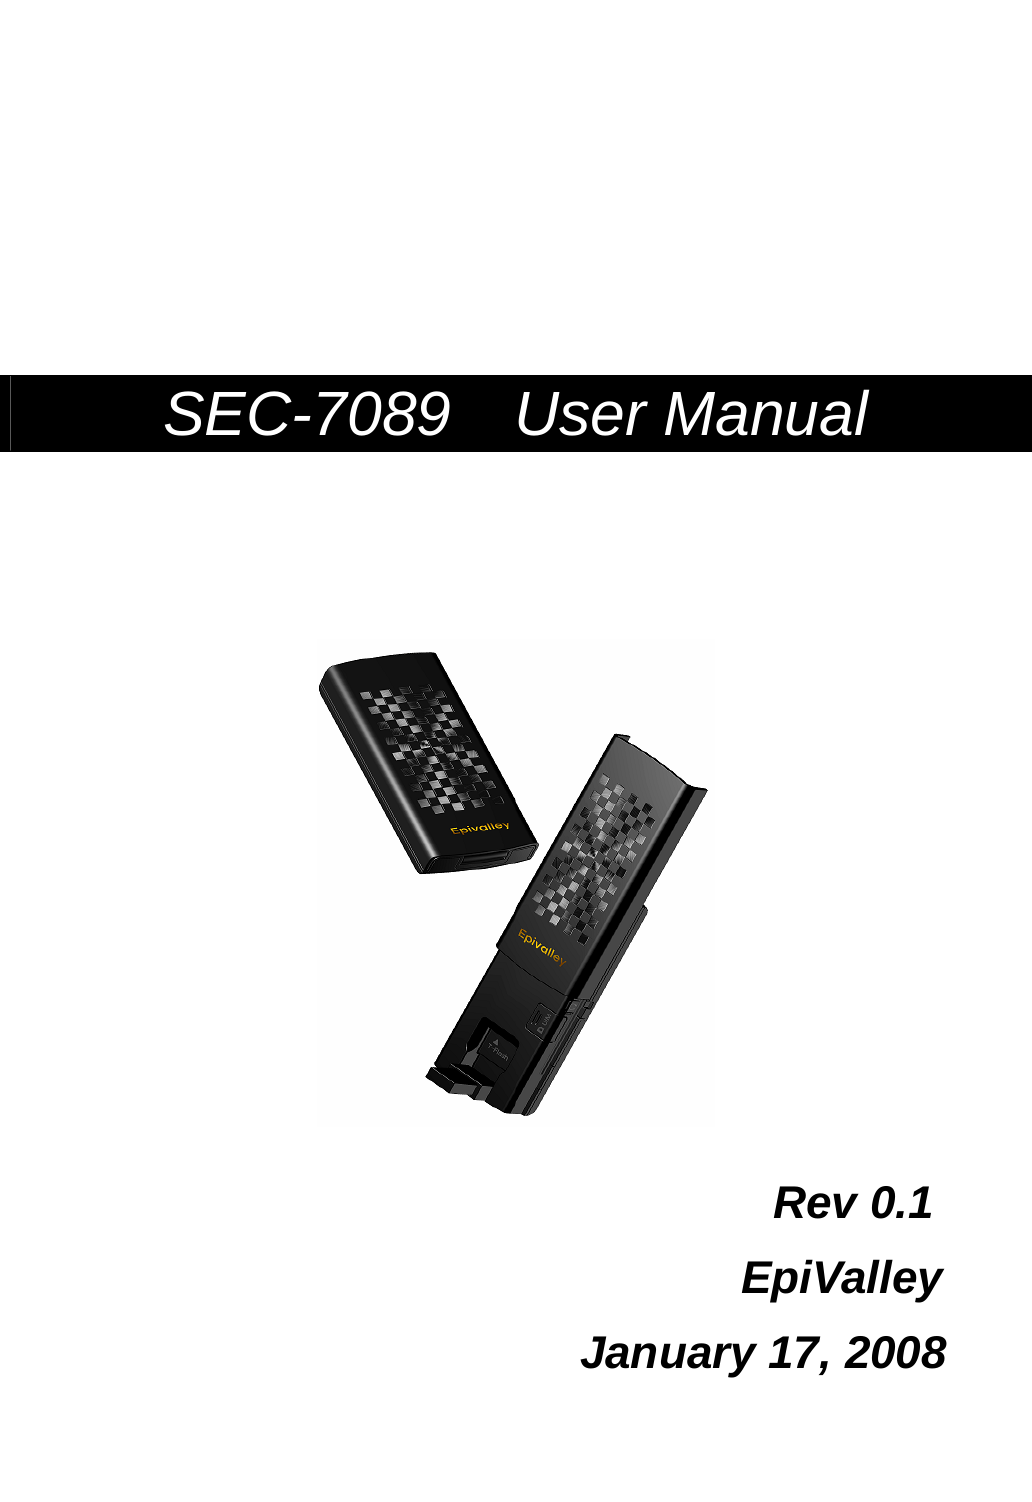                    SEC-7089  User Manual                                      Rev 0.1                              EpiValley                       January 17, 2008    